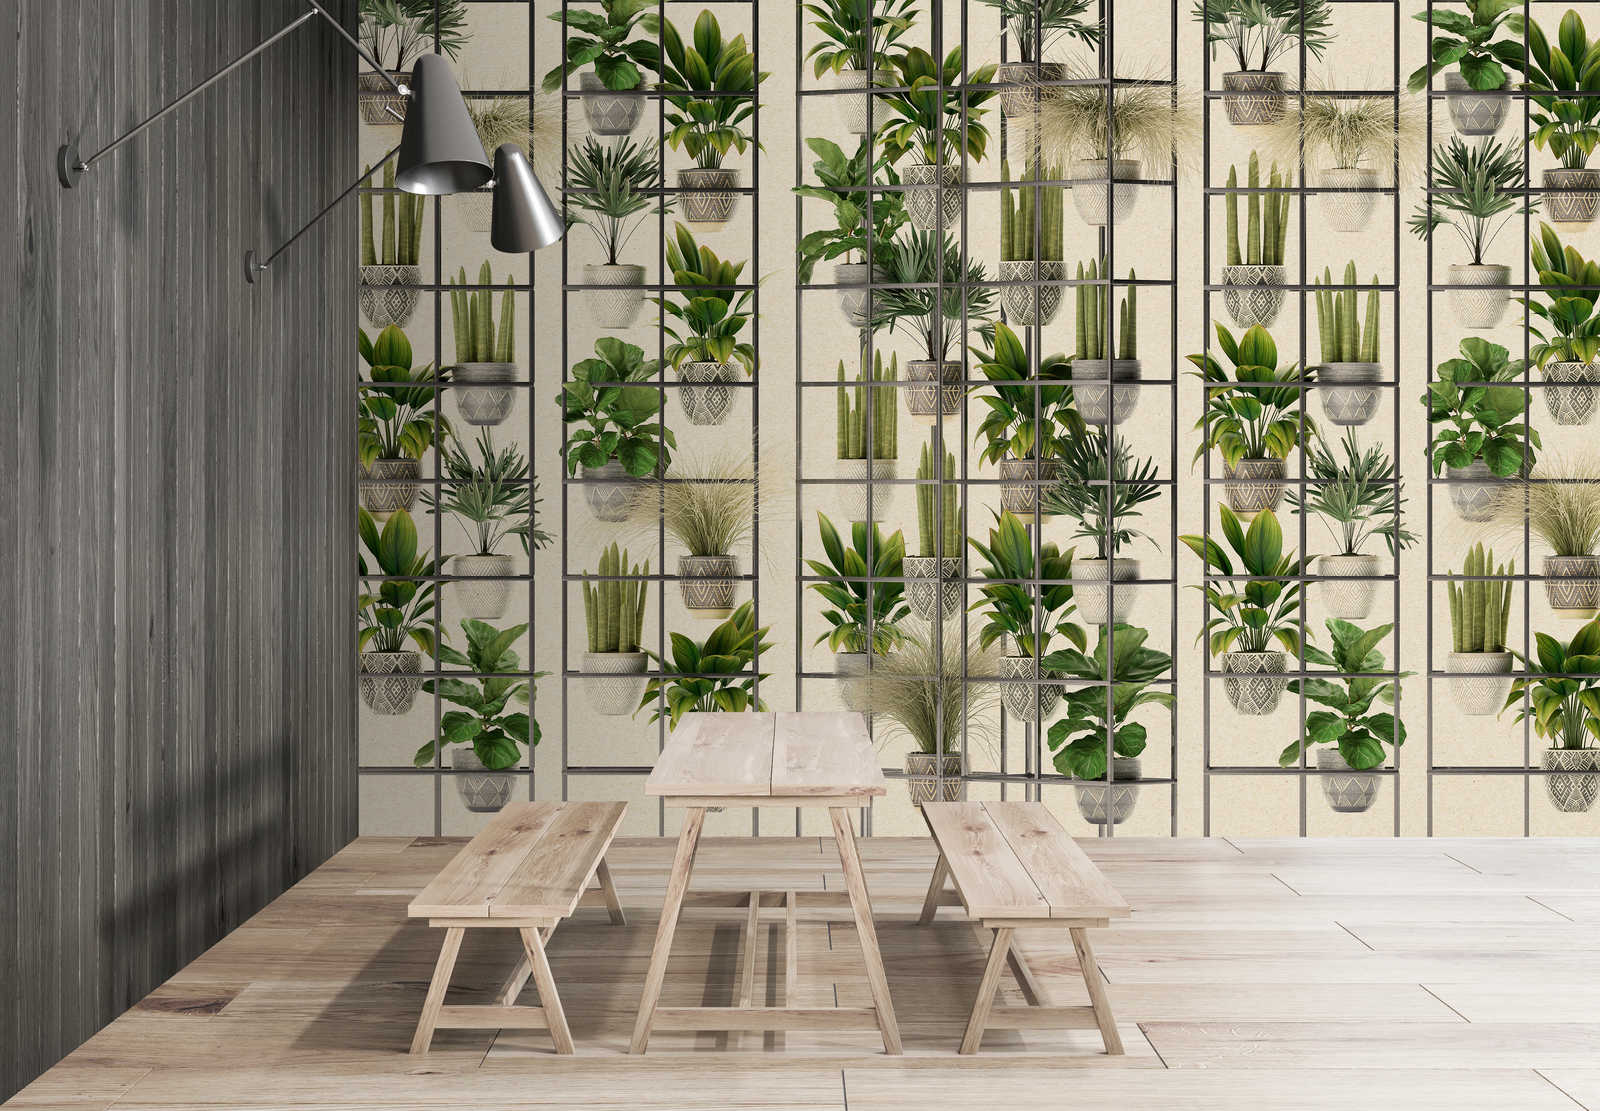             Plant Shop 2 – Fototapete moderne Pflanzwand in Grün & Grau
        